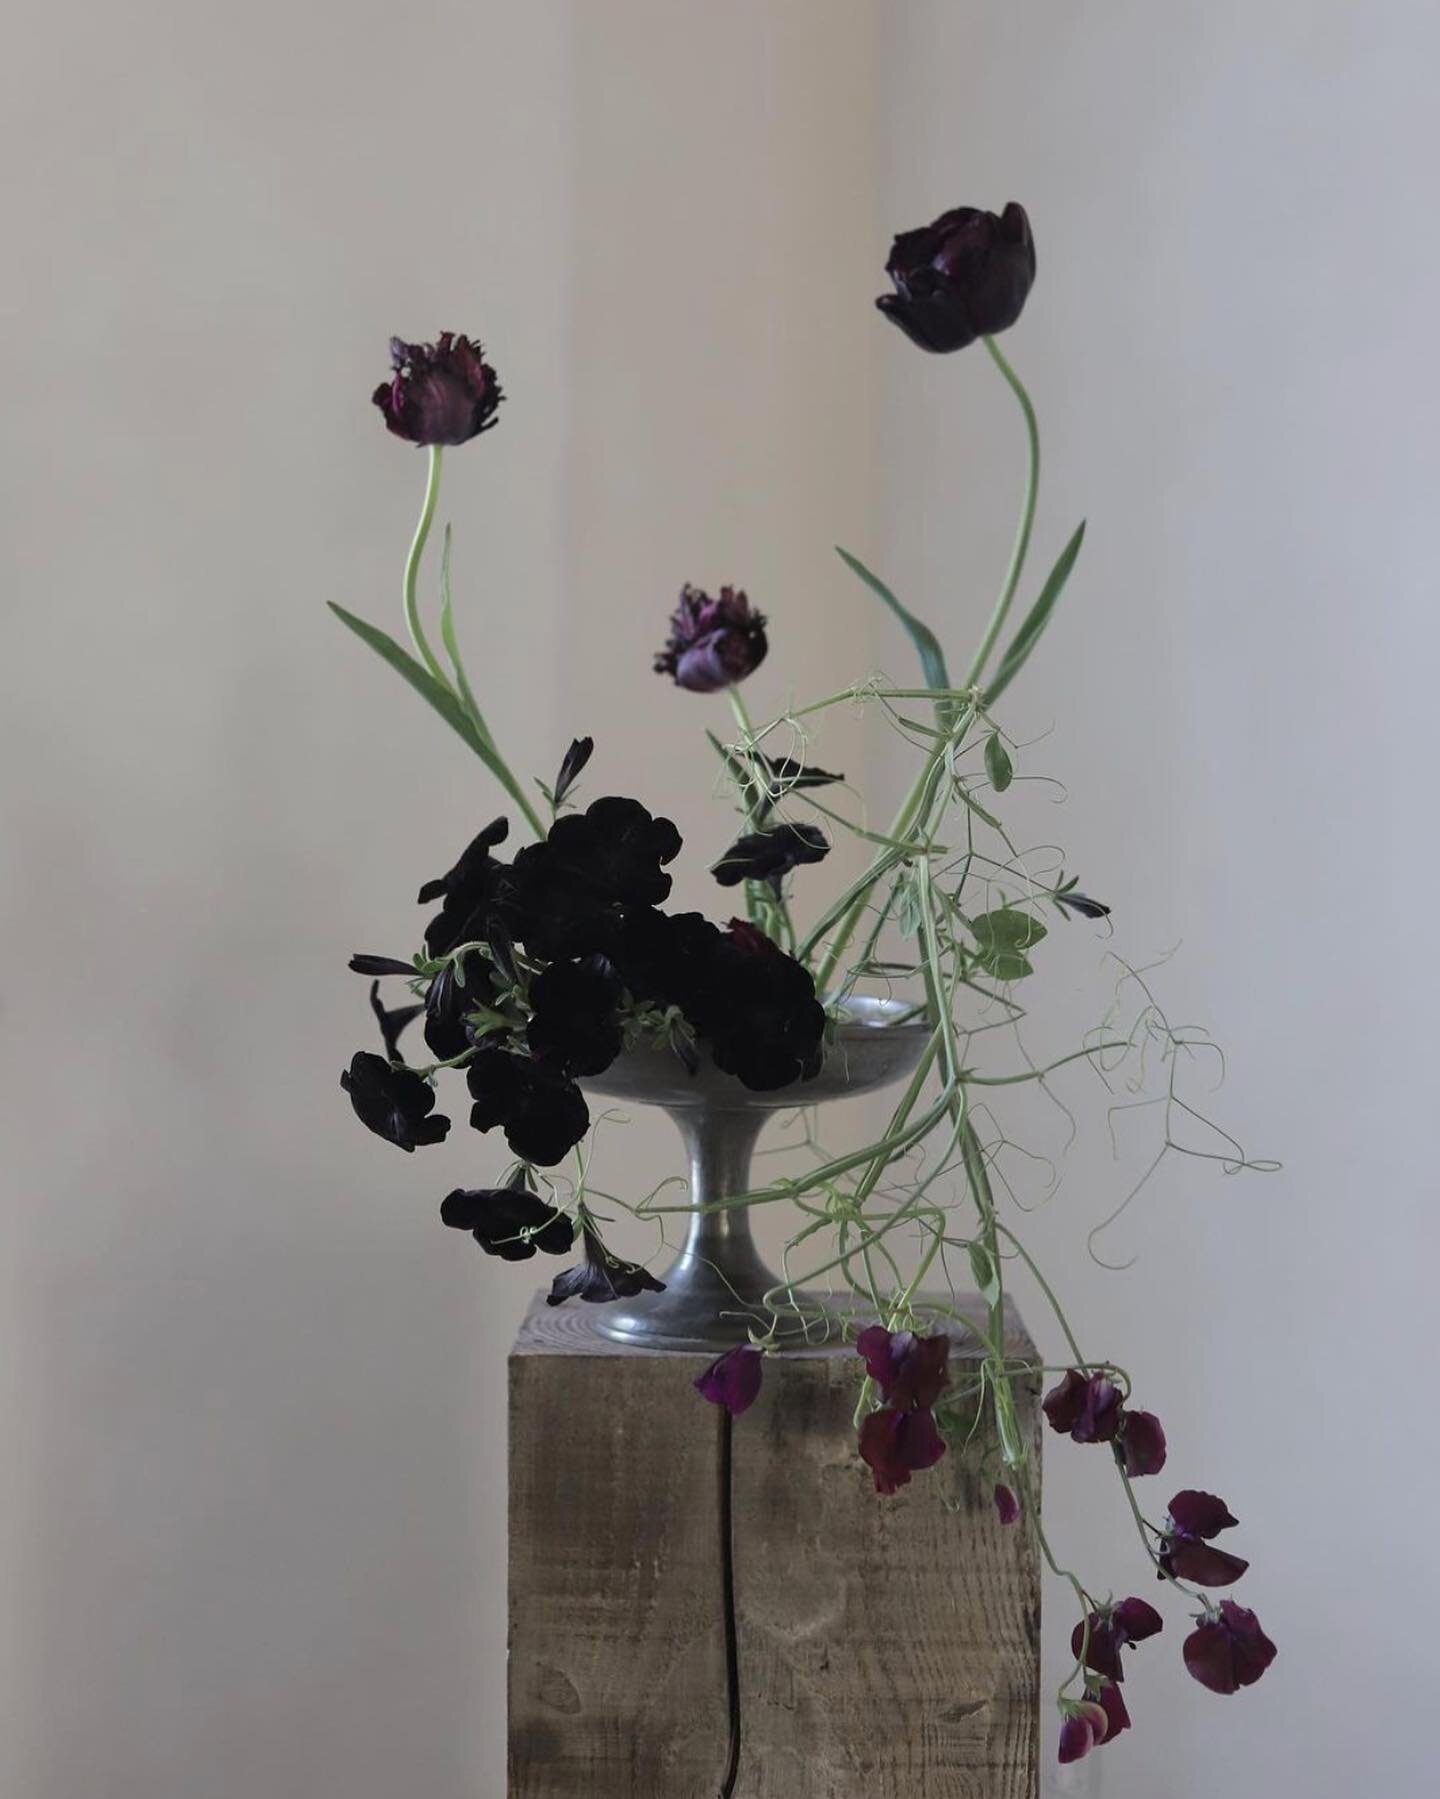 Black Tuips by Frida Kim - Talented Florist based in London
@fridakim_london 

#interiordesign #design #interior #homedecor #architecture #home #decor #interiors #homedesign #furniture #art #interiordesigner #decoration #luxury #designer